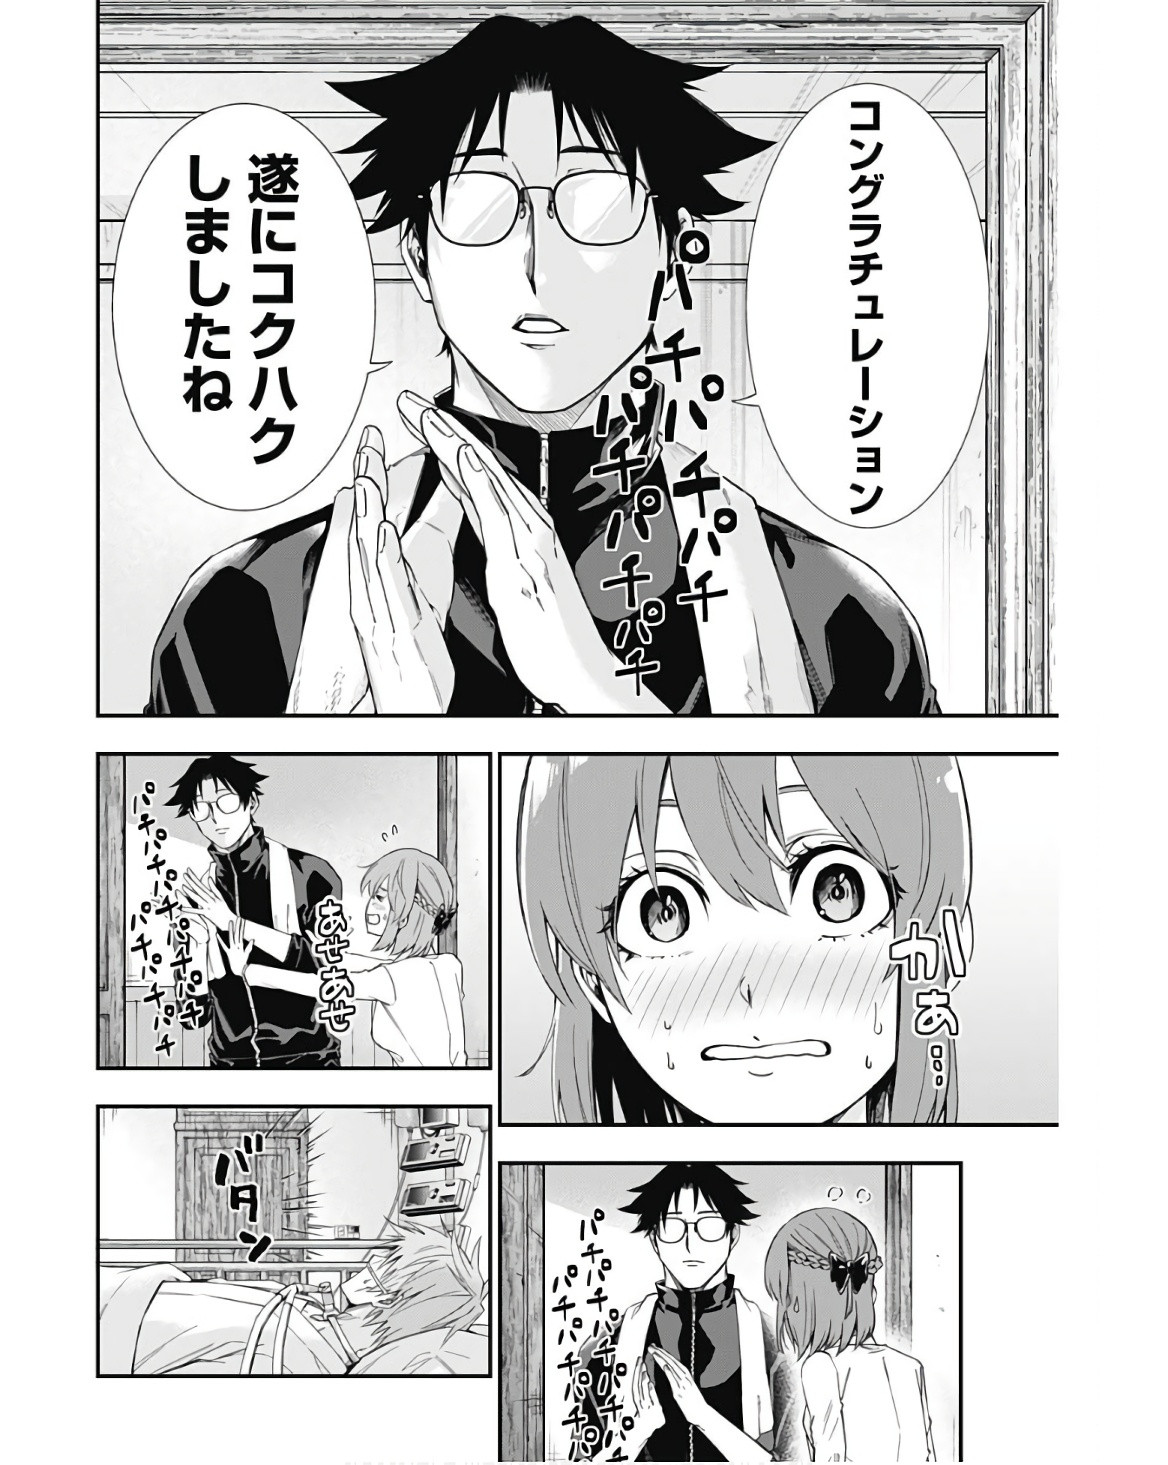 Doctor Zelos: Sports Gekai Nonami Yashiro no Jounetsu - Chapter 075 - Page 2